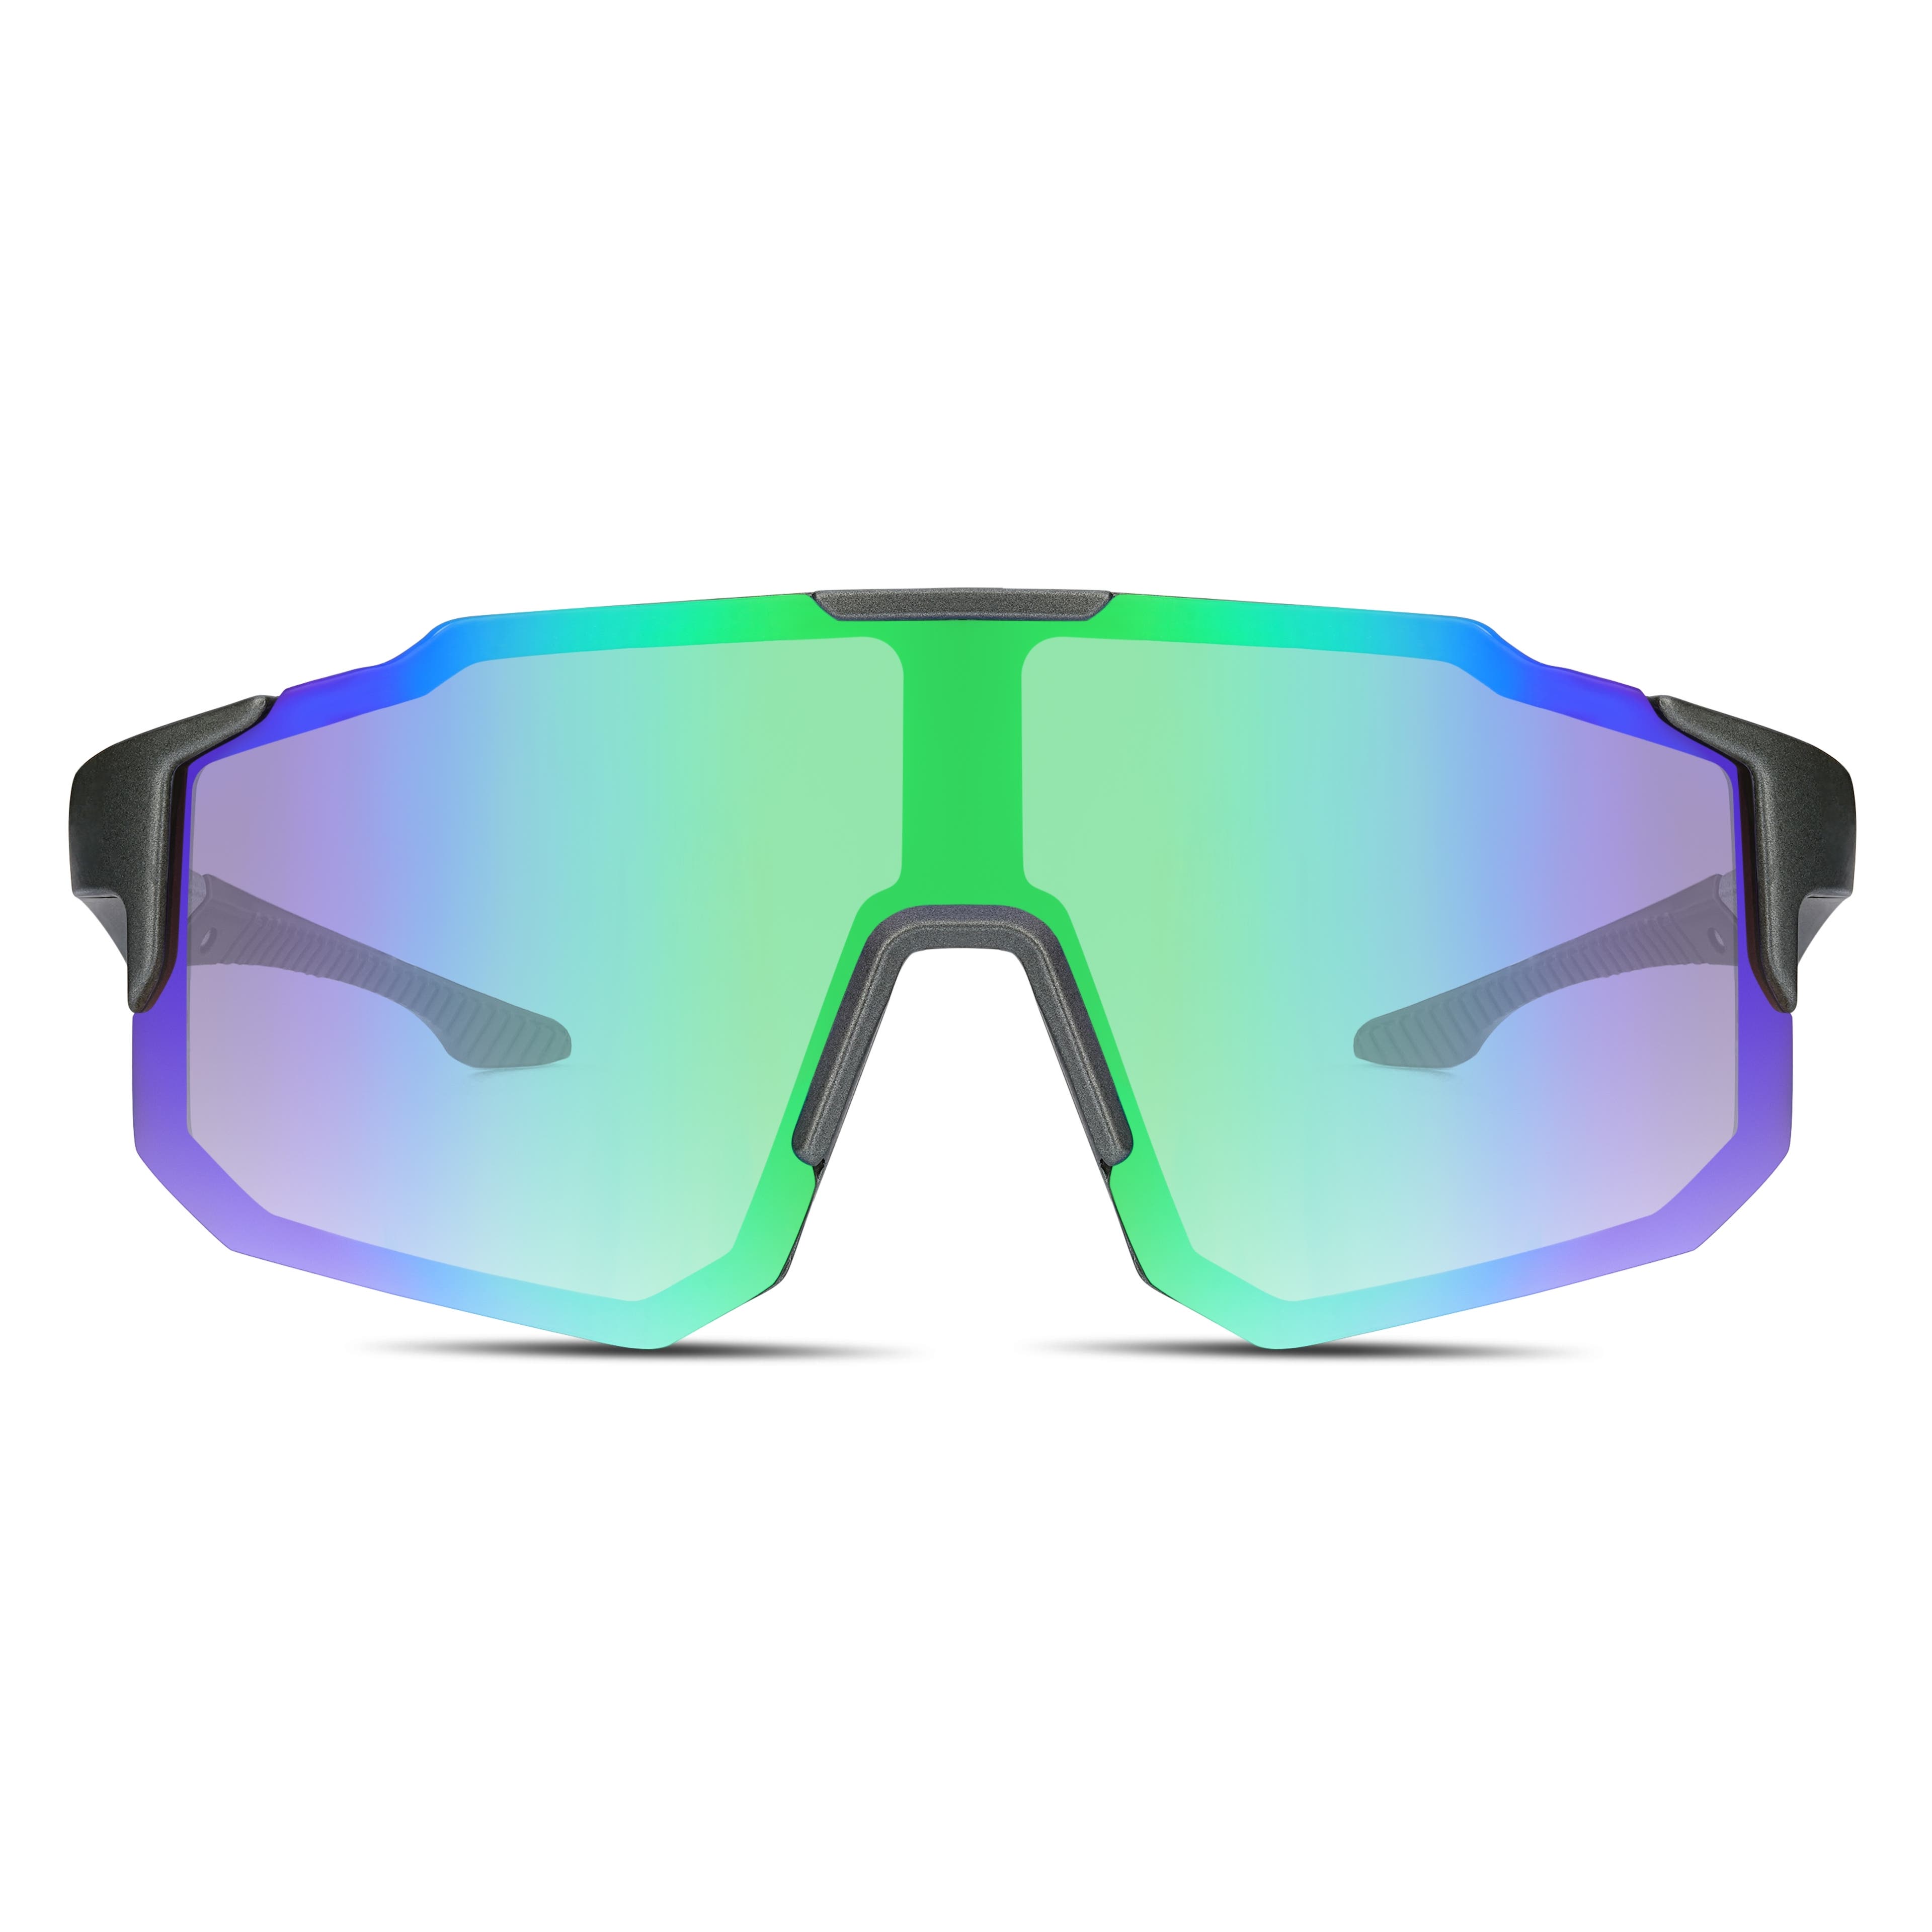 Black & Green Wraparound Sports Sunglasses